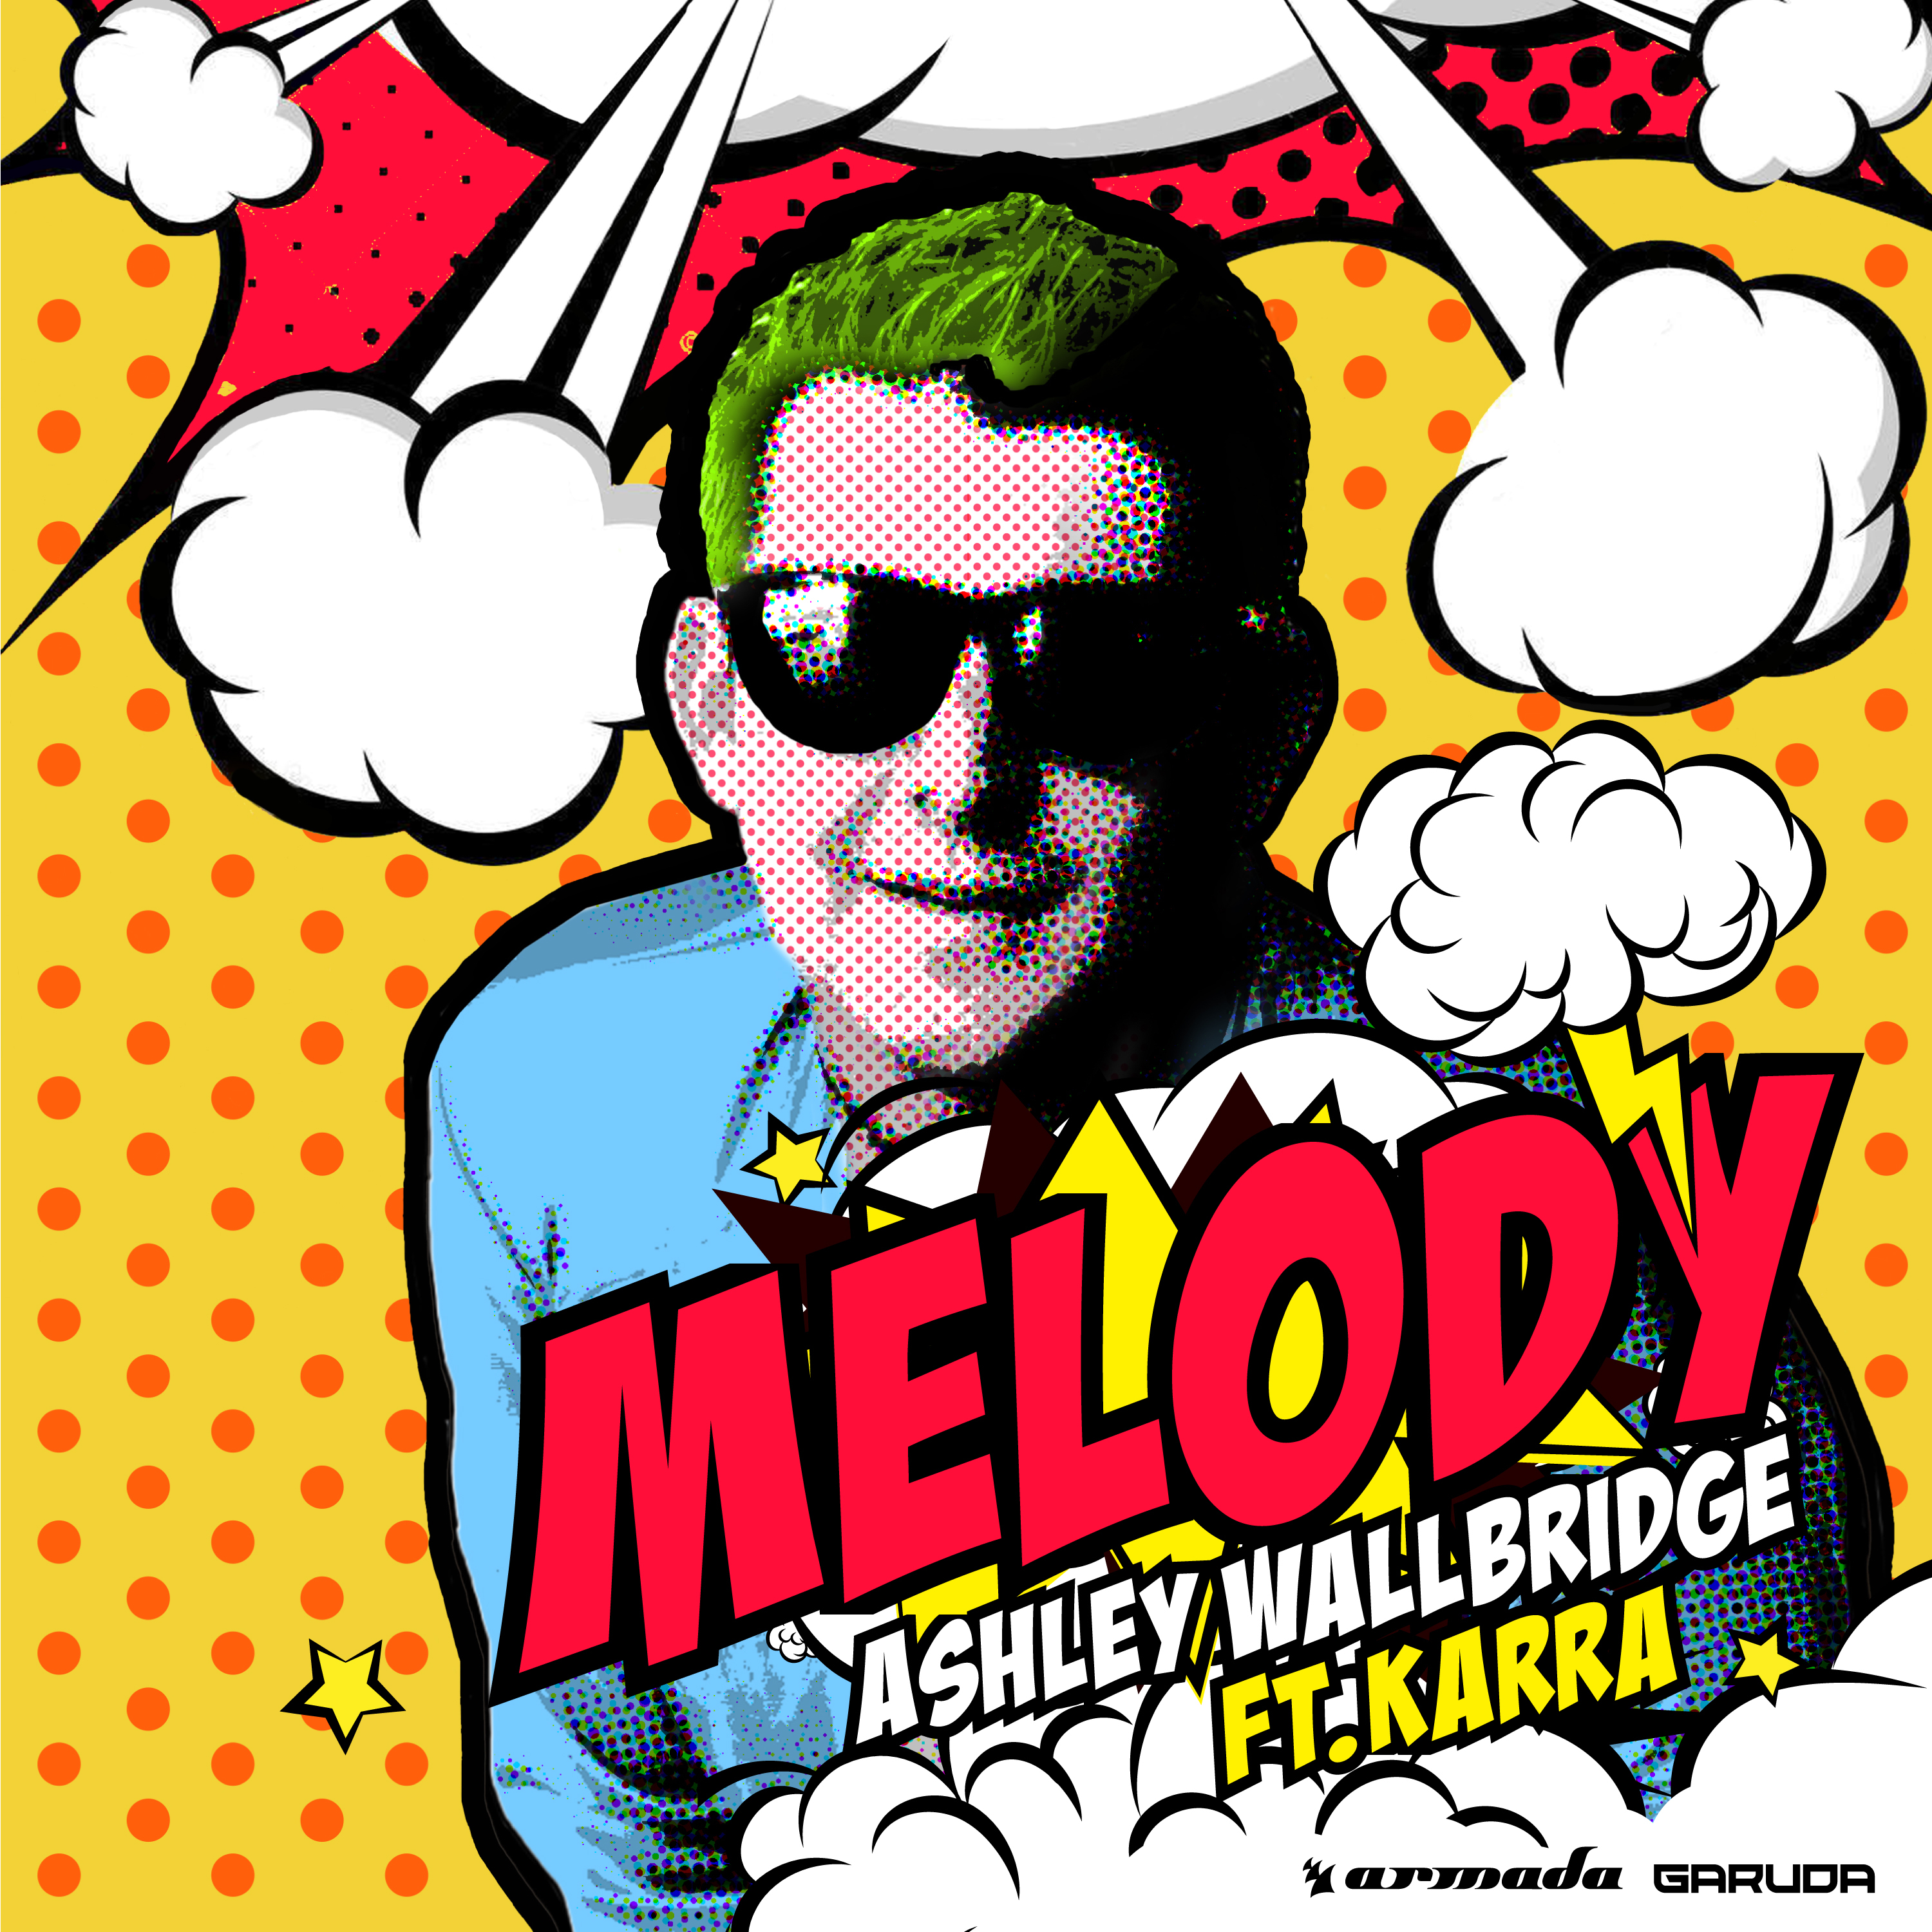 Melody (Club Mix)